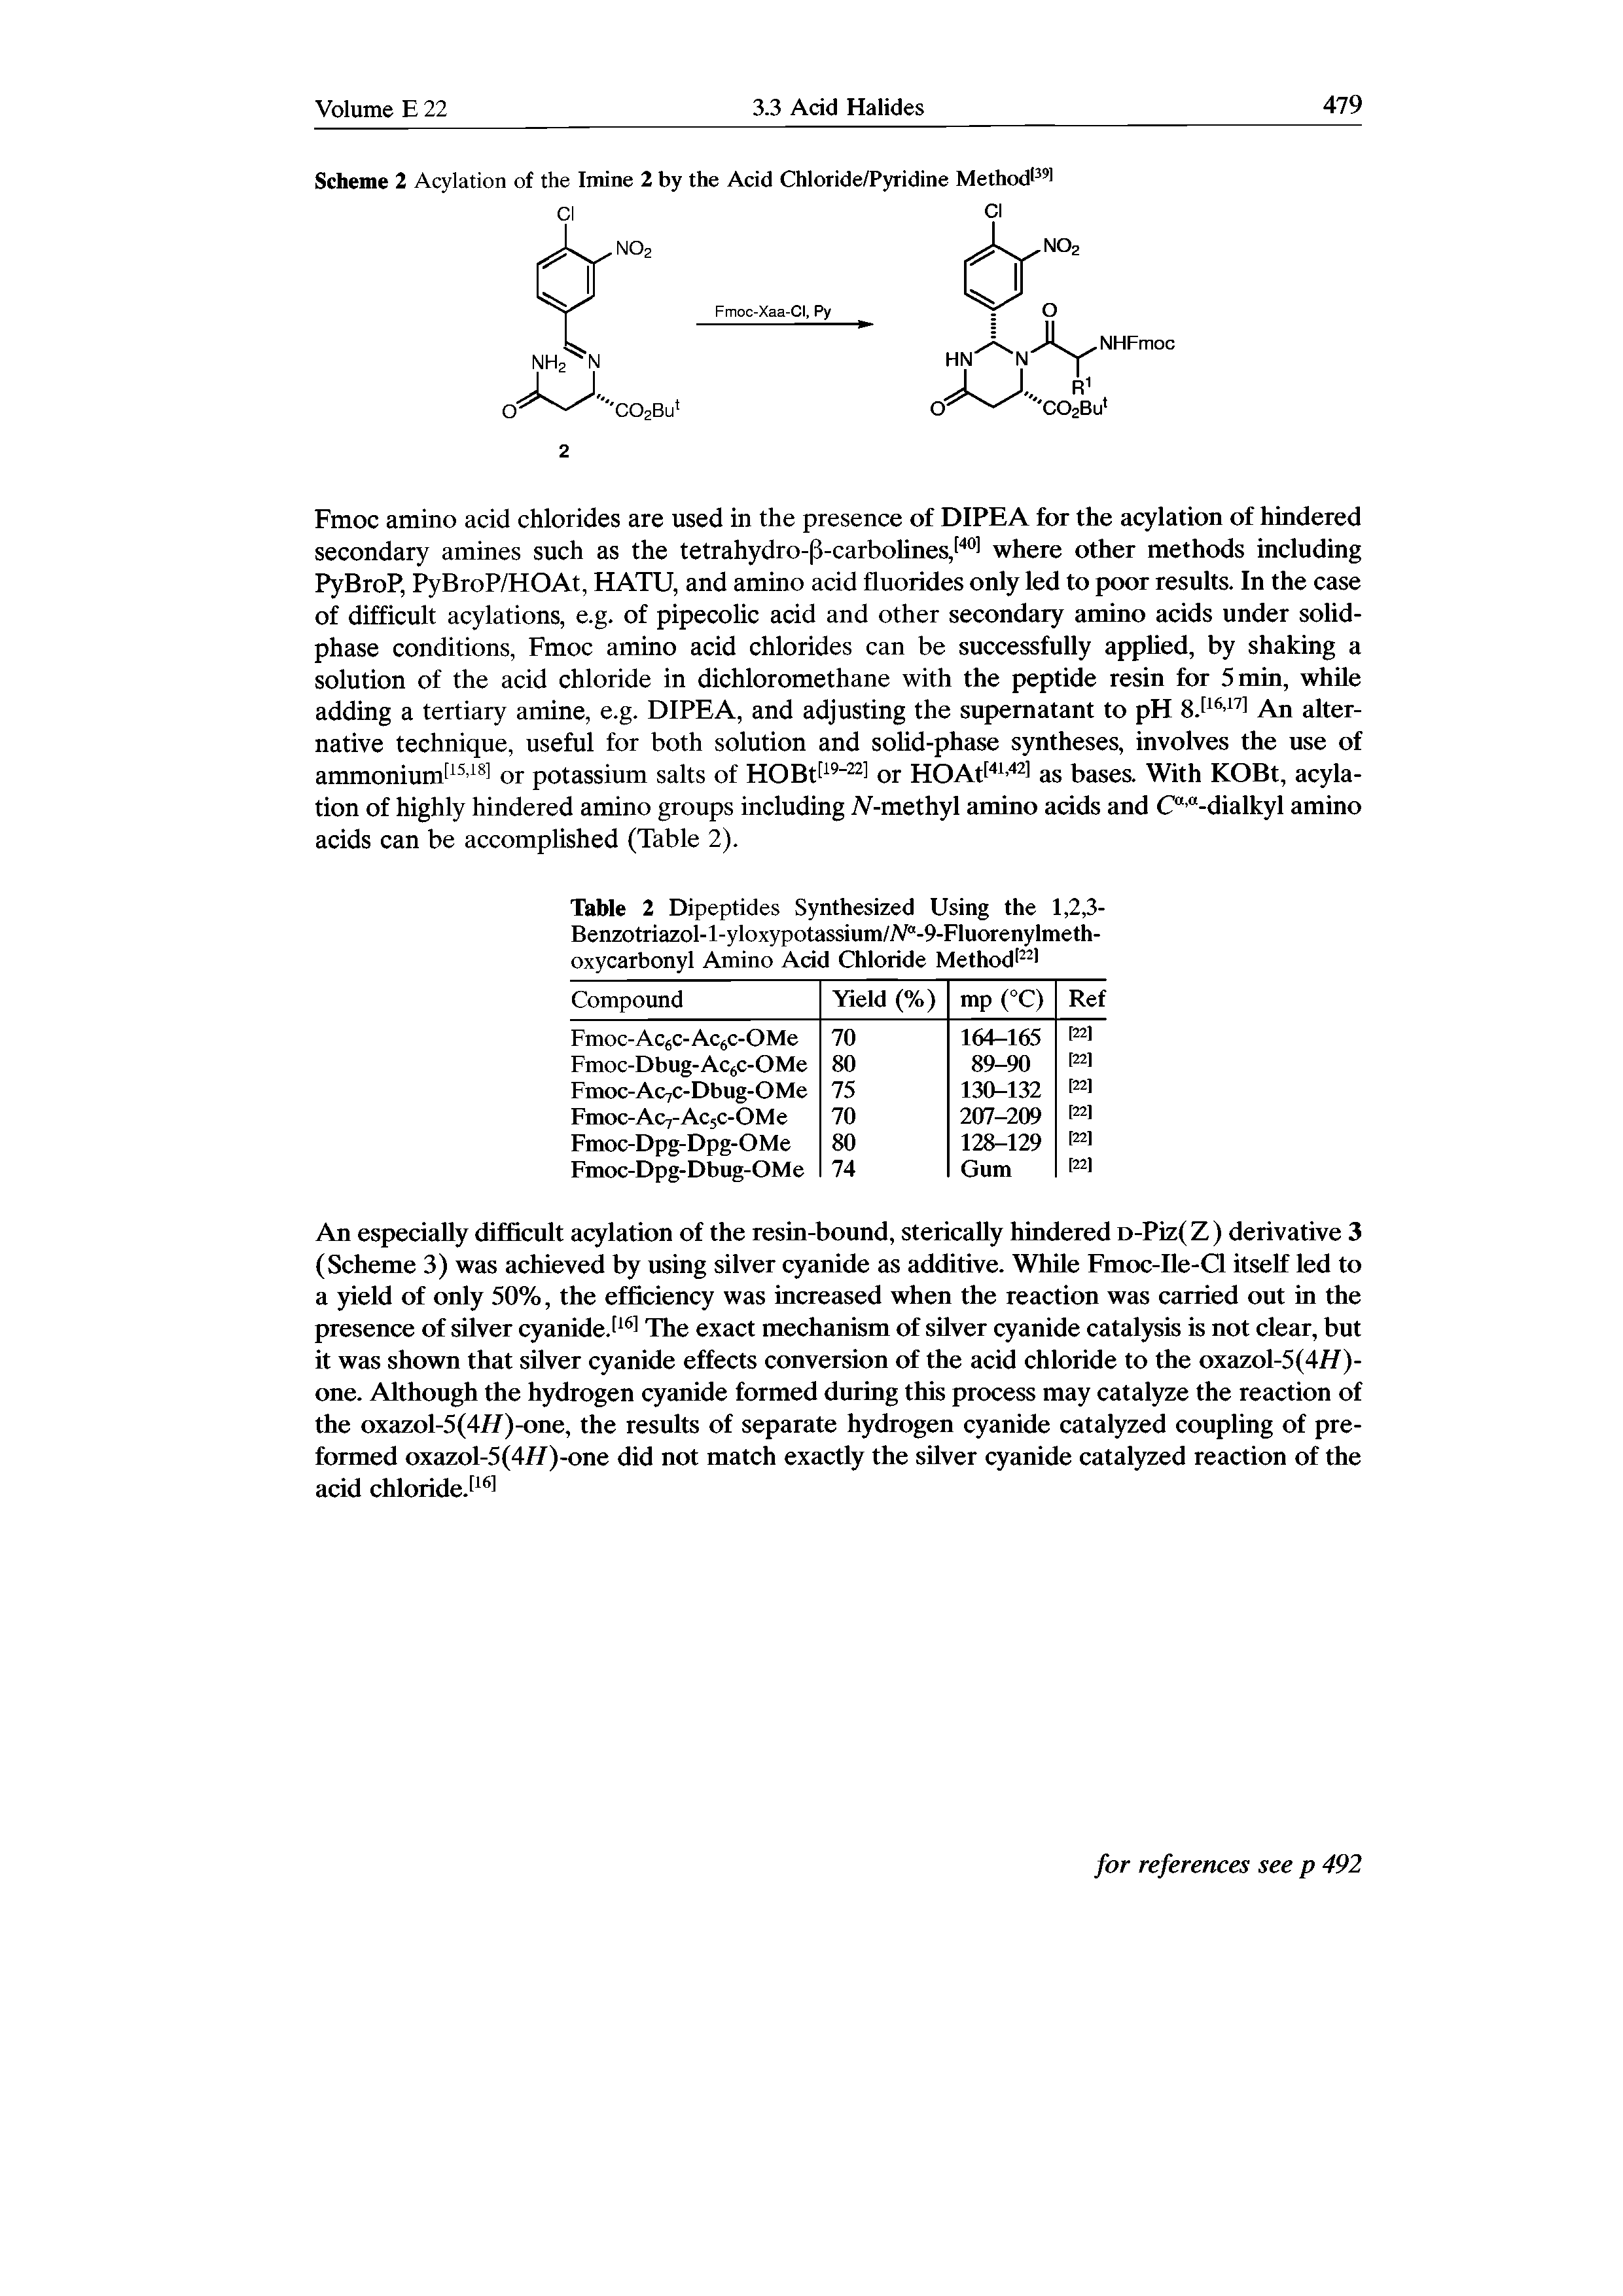 Scheme 2 Acylation of the Imine 2 by the Acid Chloride/Pyridine Method ...